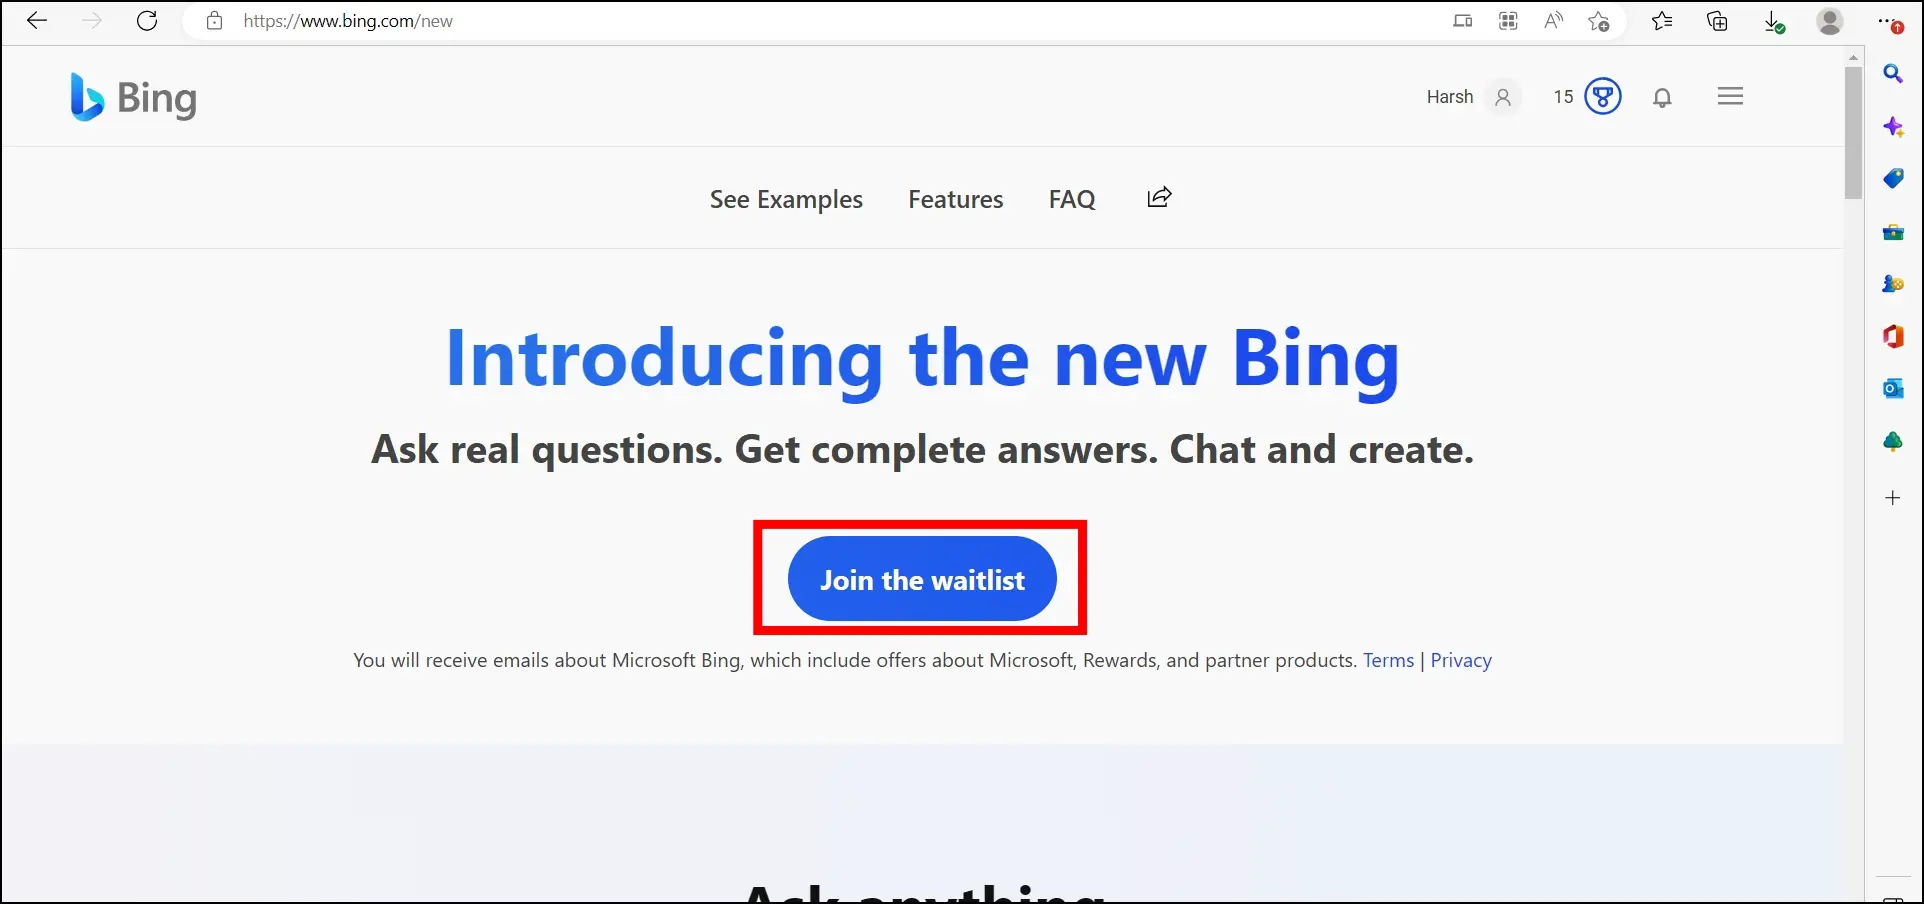 How to Use Microsoft Bing AI Search?